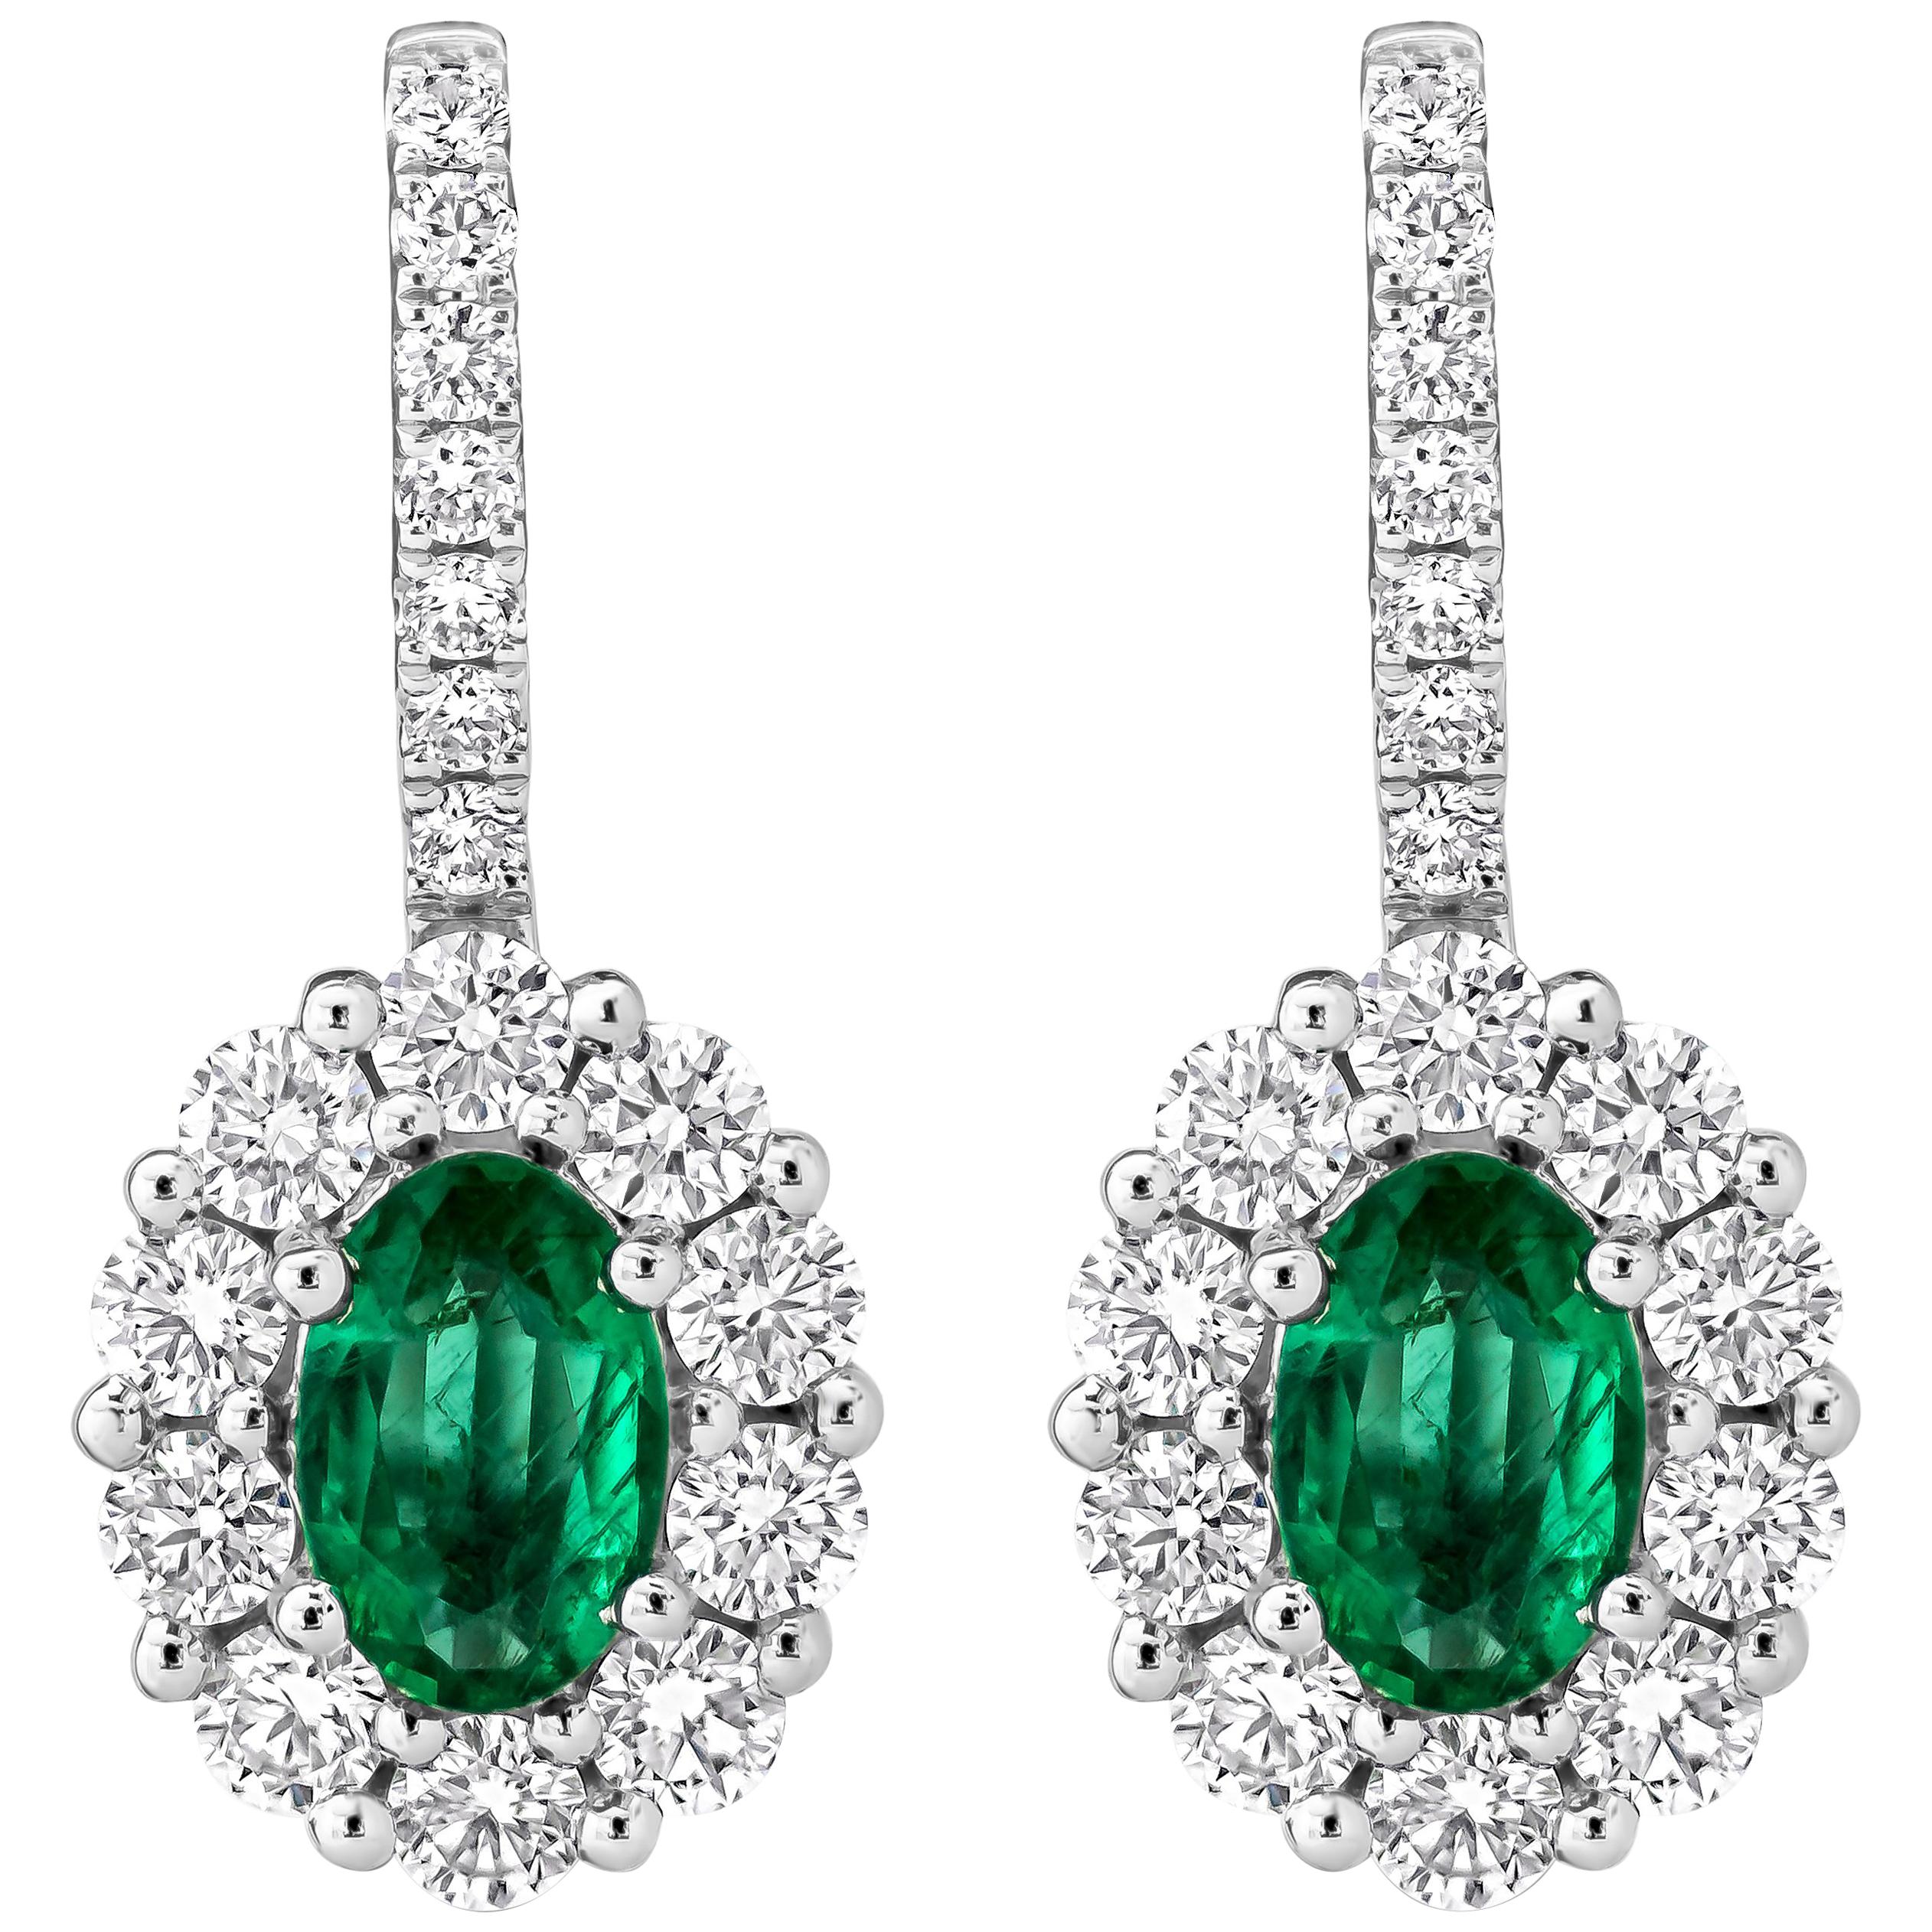 Roman Malakov 0.78 Carat Oval Cut Emerald and Diamond Halo Lever-Back Earrings